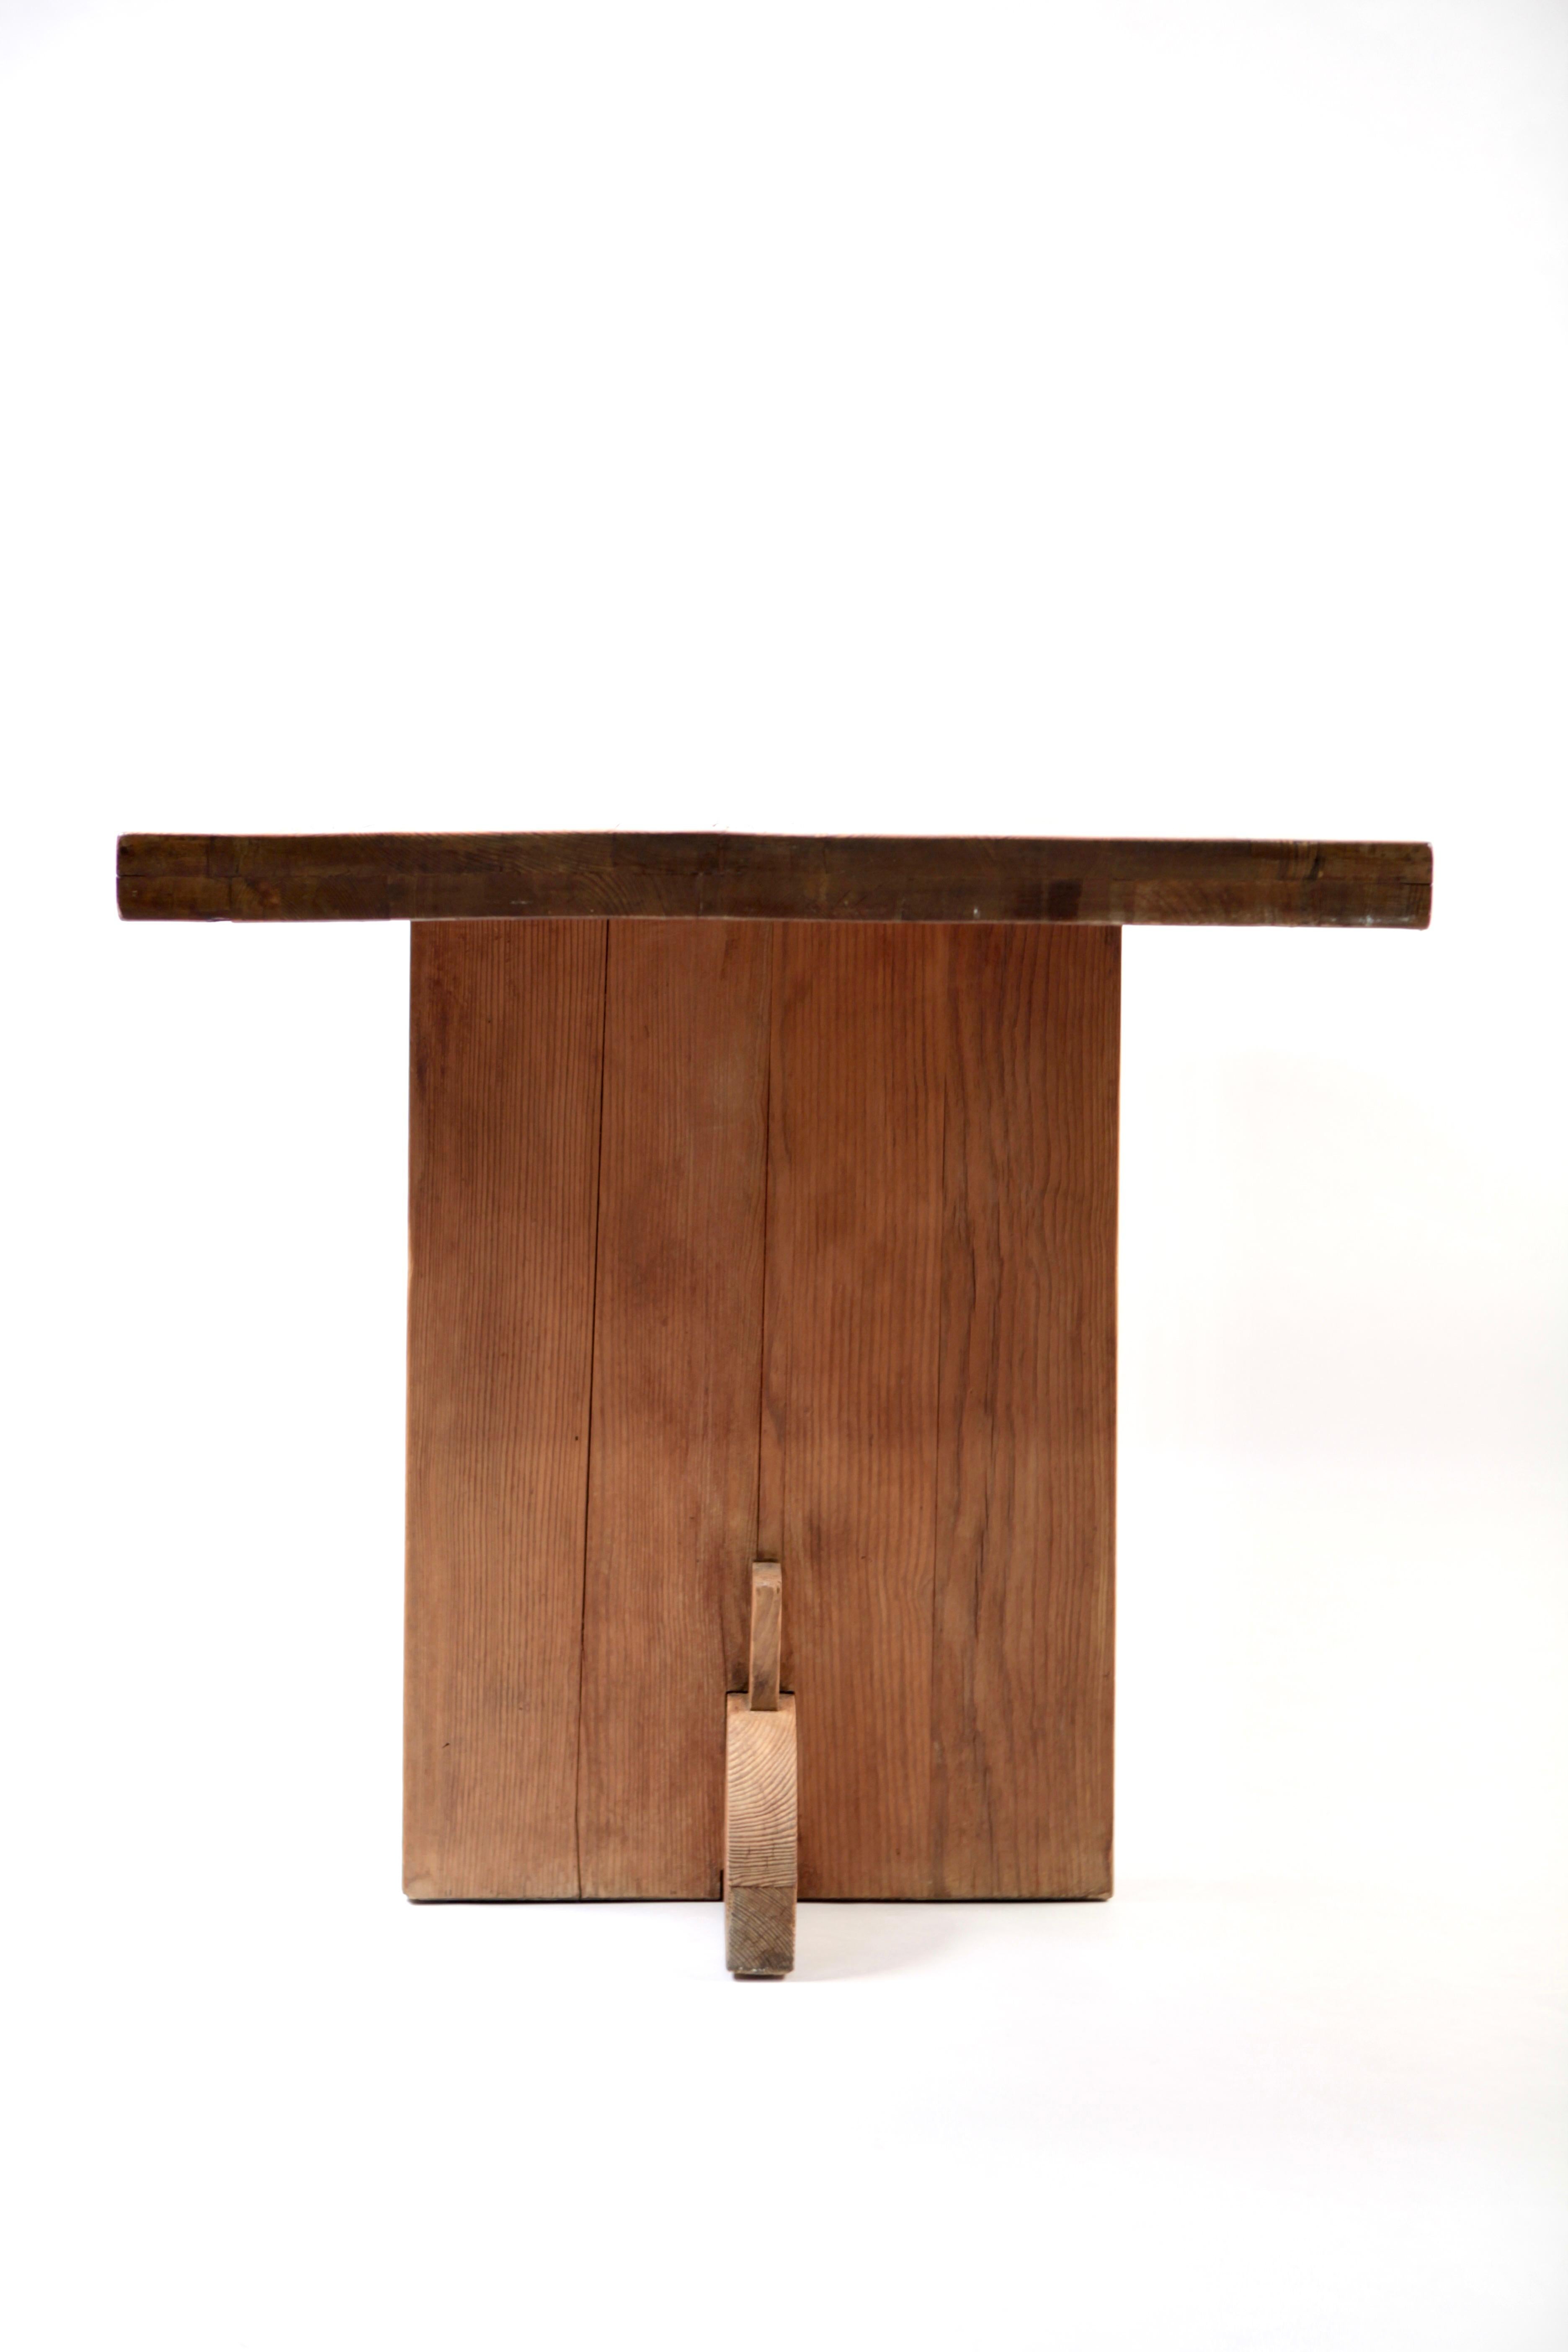 Axel-Einar Hjorth, 'Lovö' Table, Nordiska Kompaniet, 1932 For Sale 2